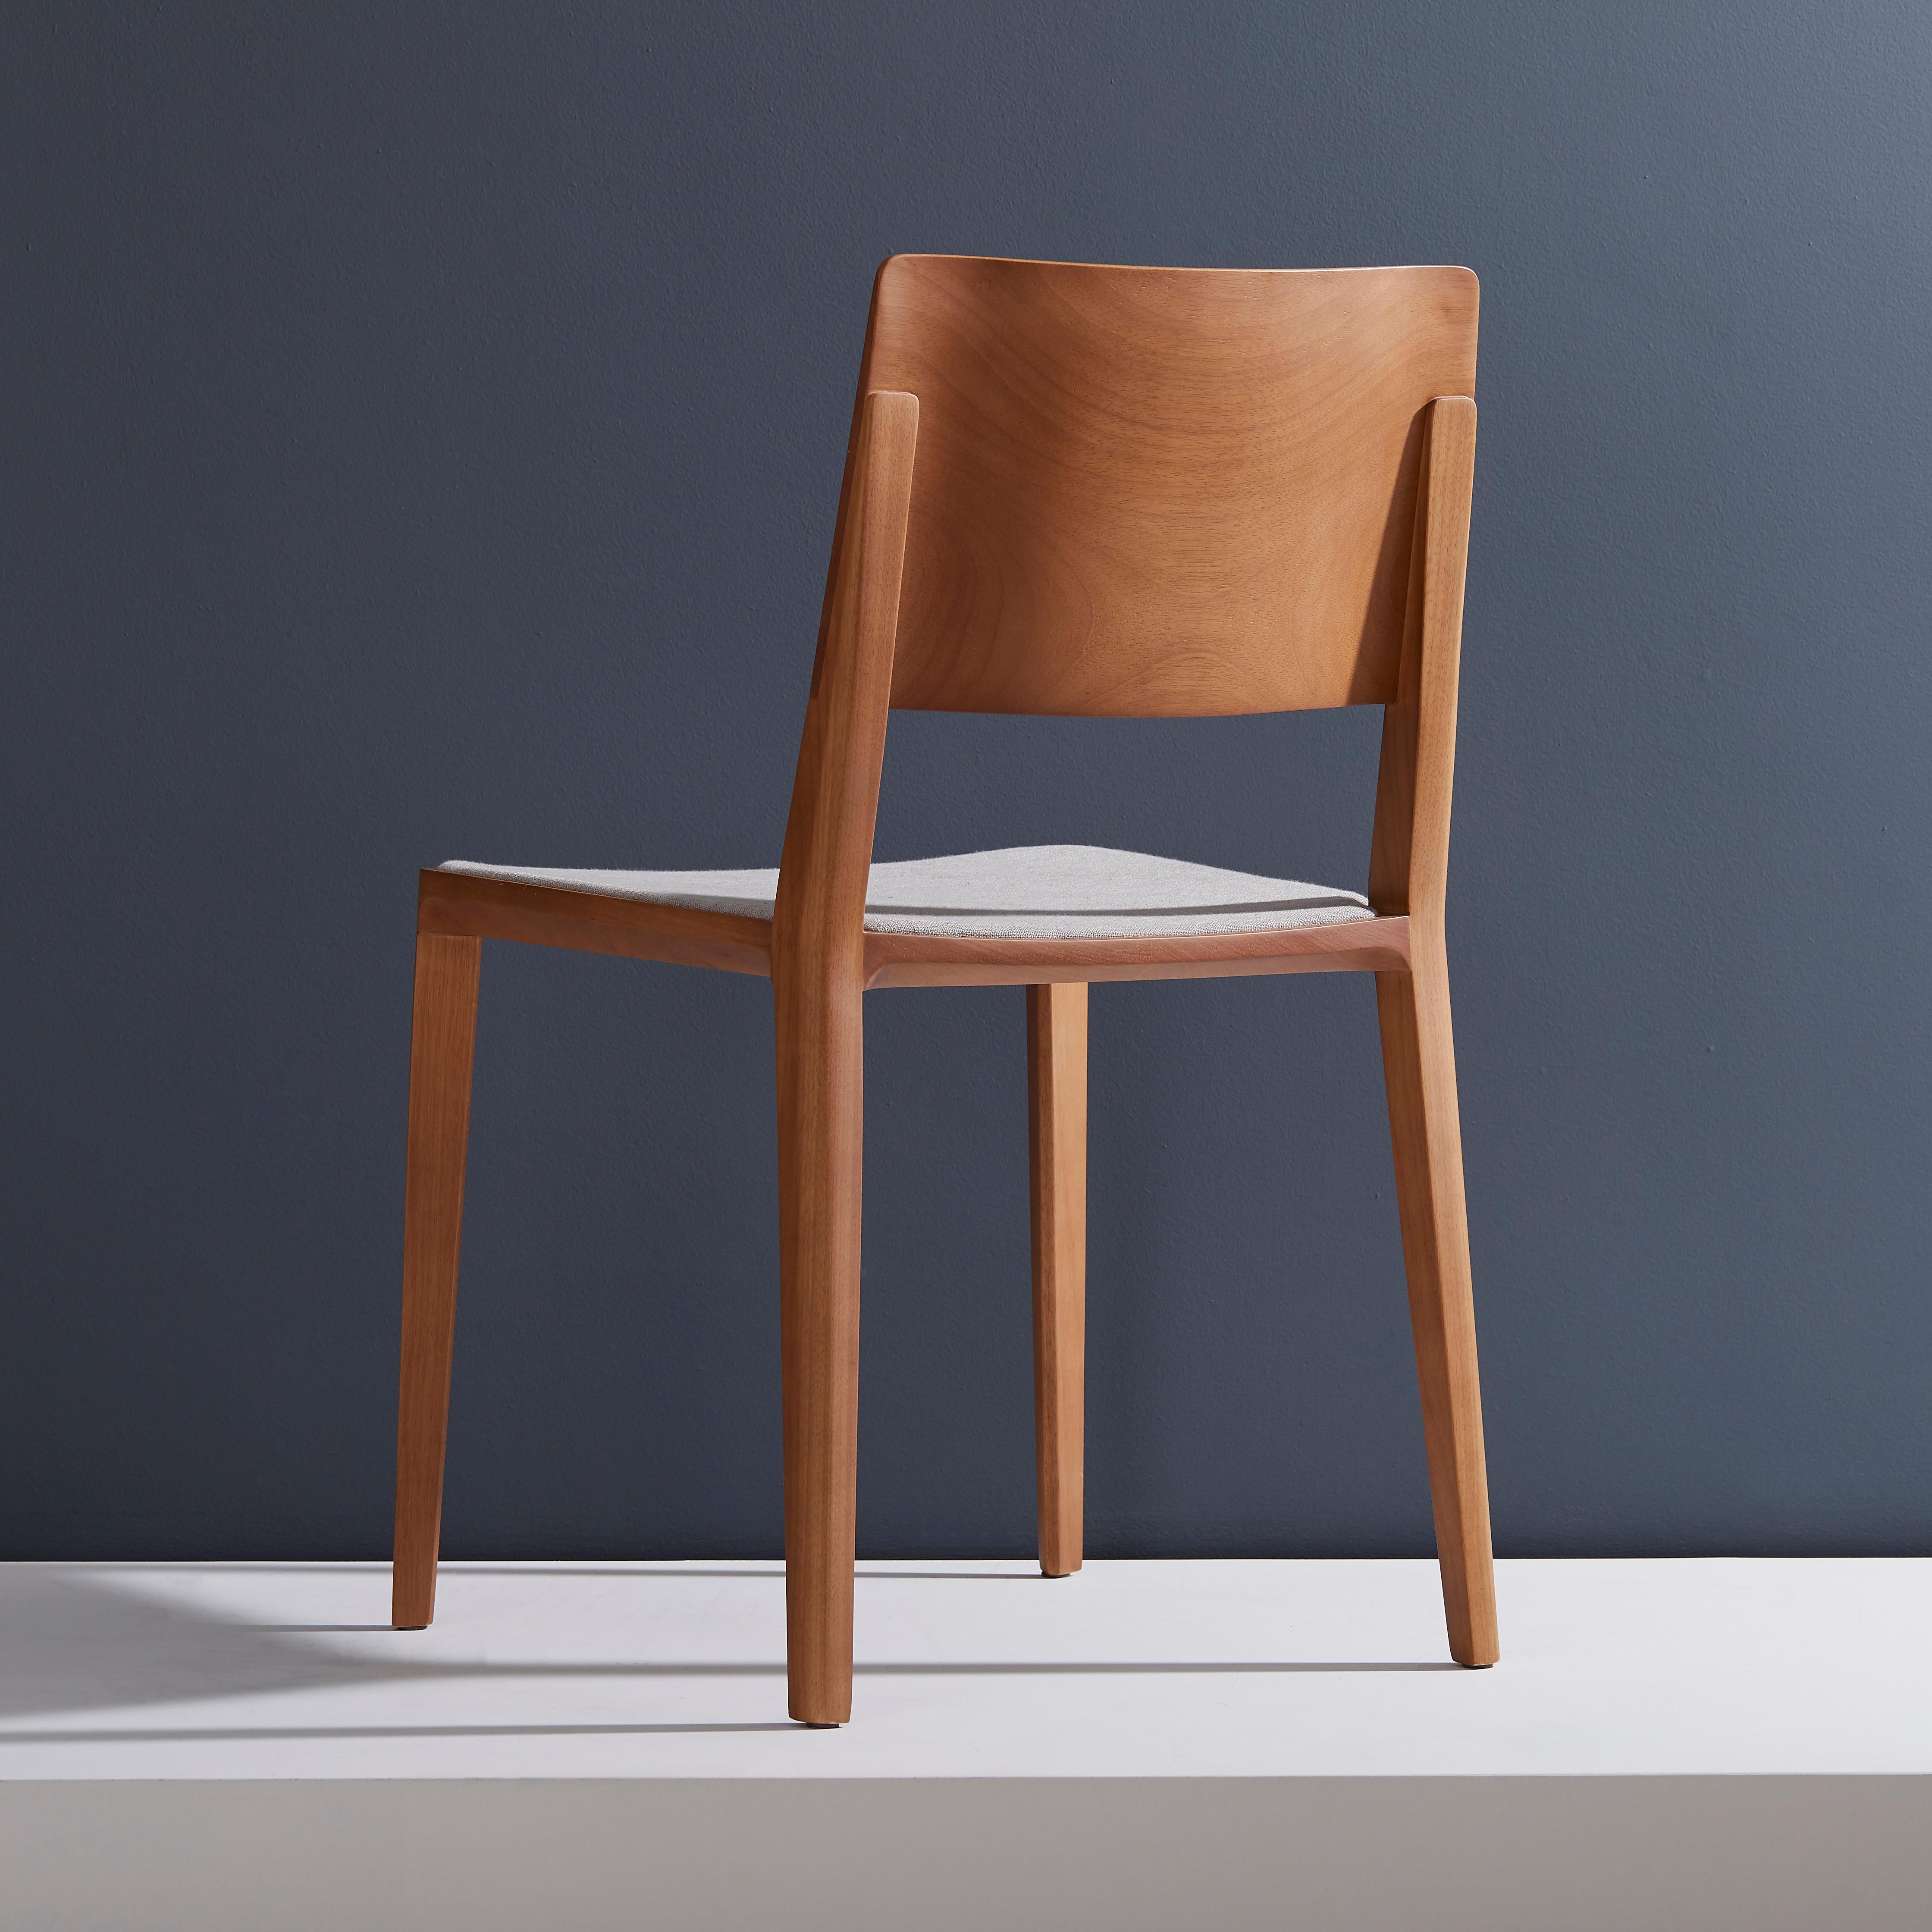 minimalist wood chair